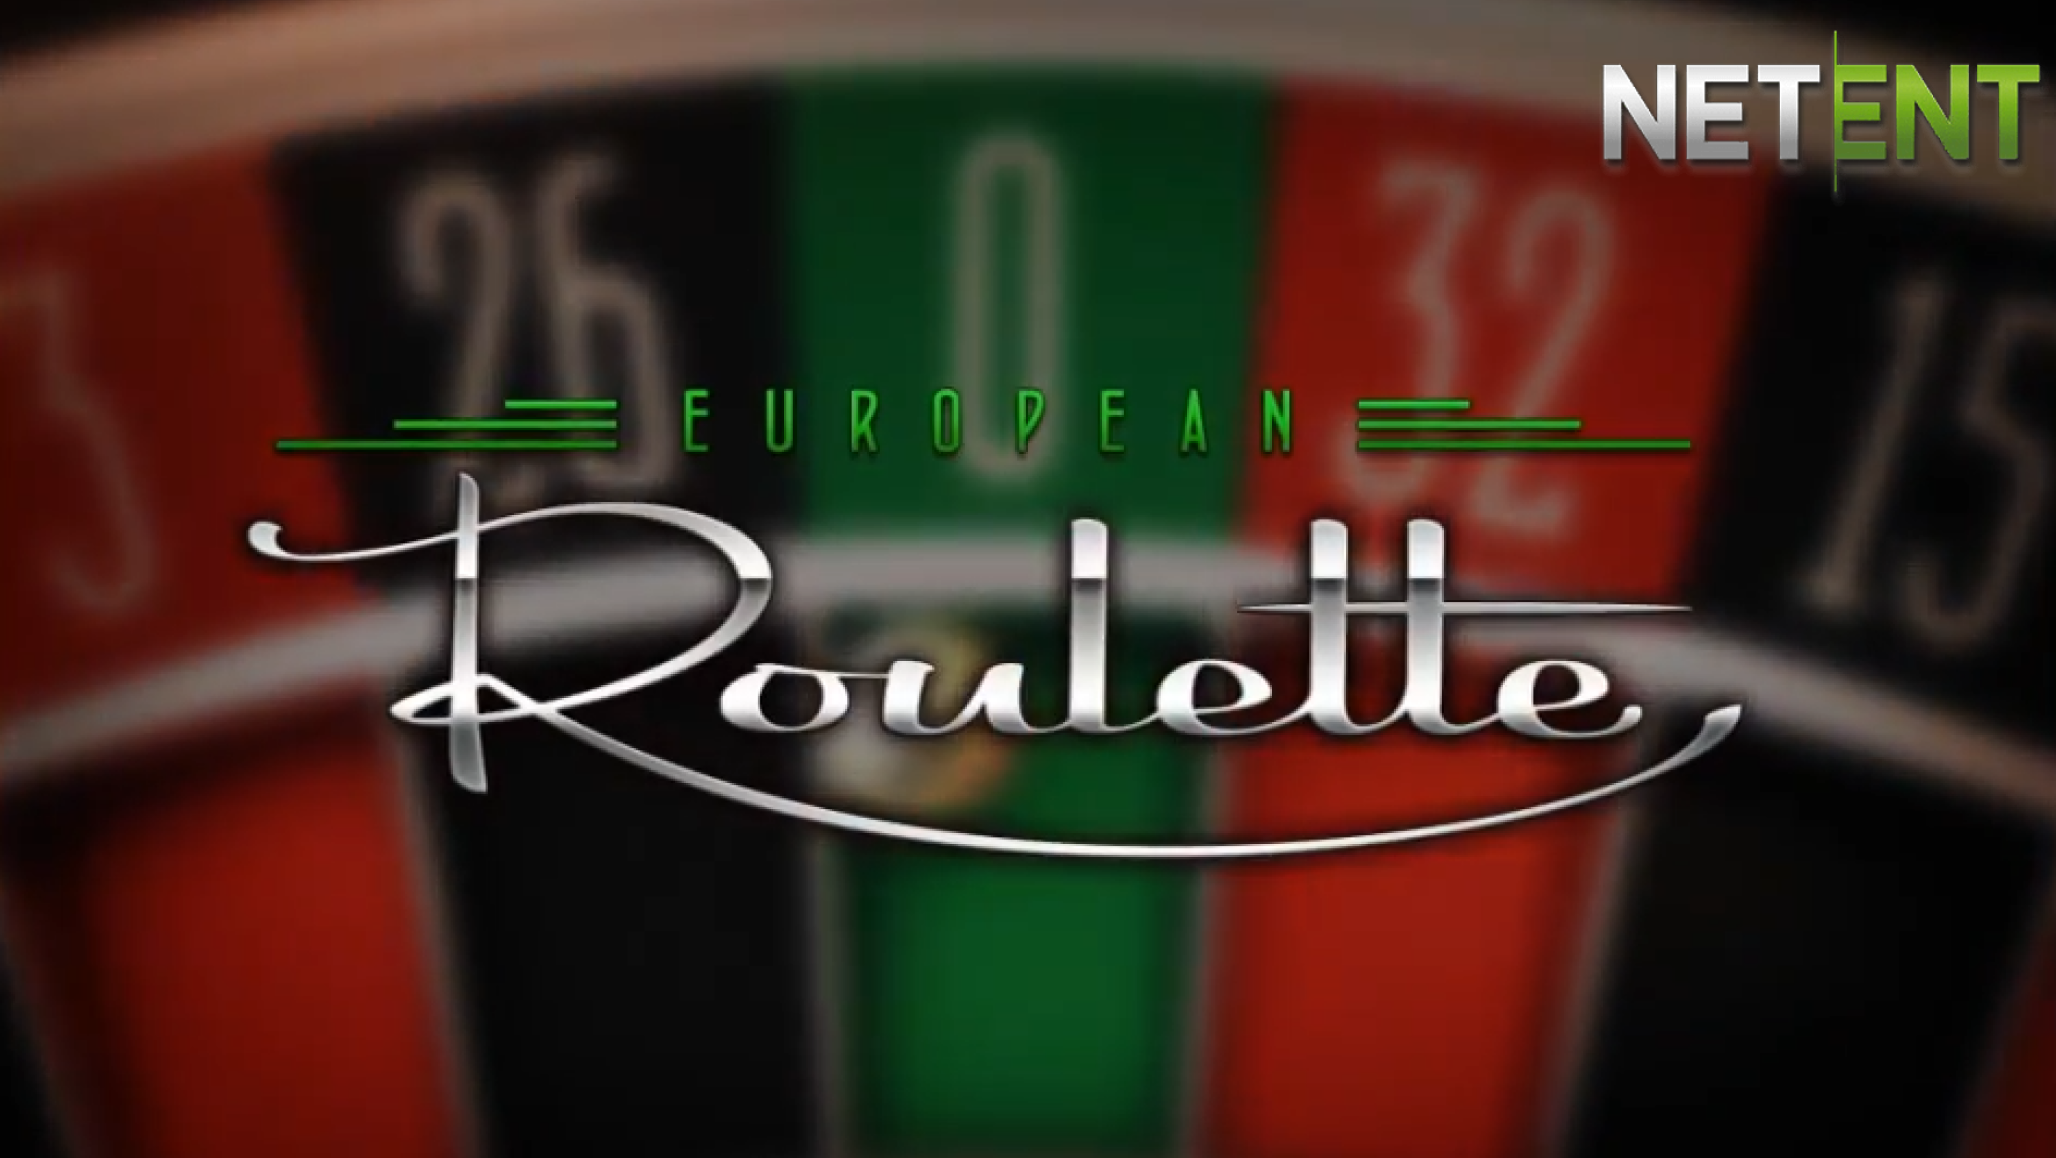 NetEnt di European Roulette